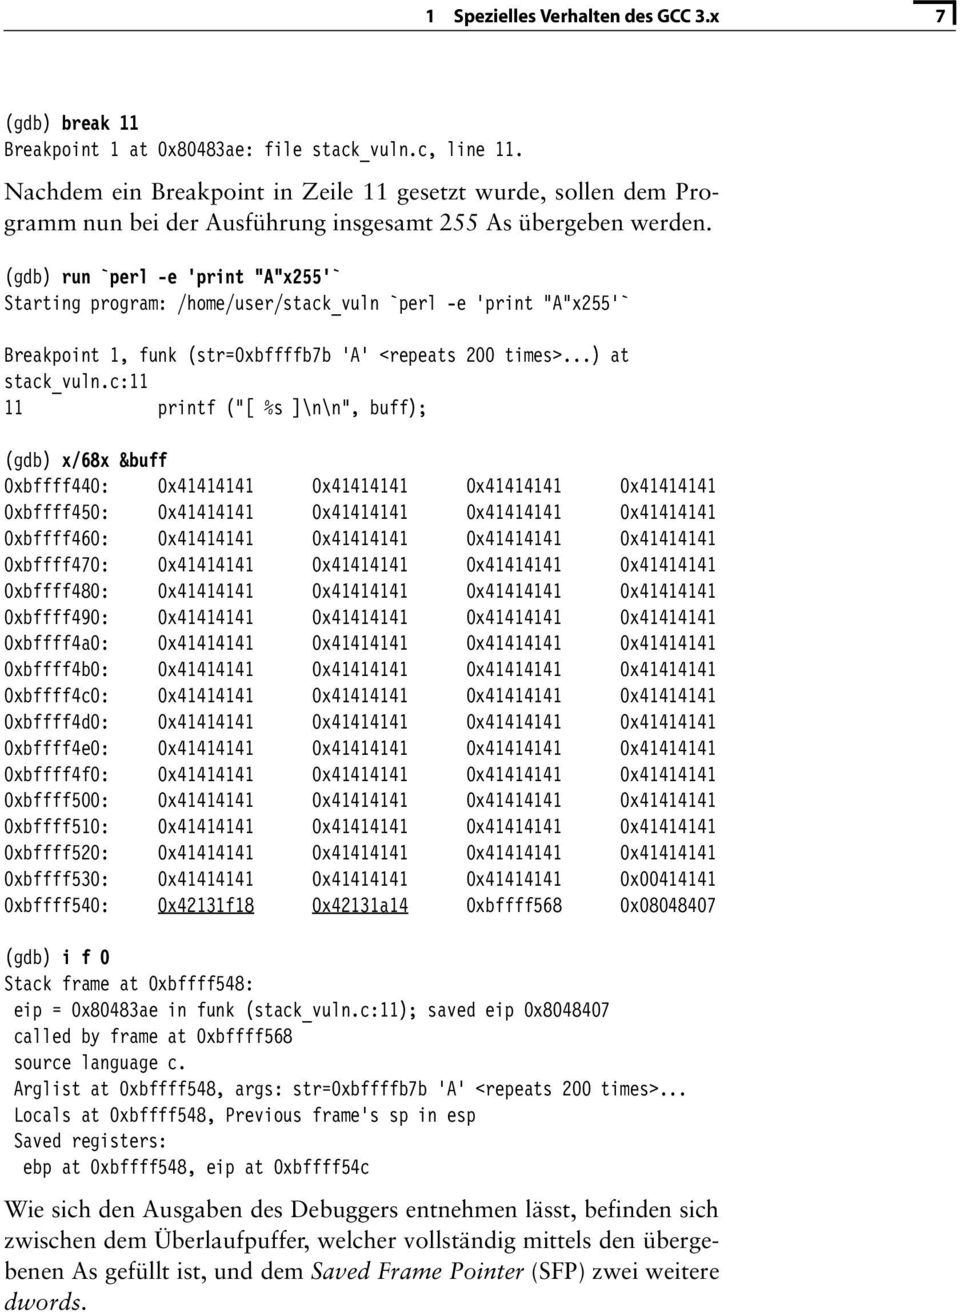 (gdb) run `perl -e 'print "A"x255'` Starting program: /home/user/stack_vuln `perl -e 'print "A"x255'` Breakpoint 1, funk (str=0xbffffb7b 'A' <repeats 200 times>...) at stack_vuln.